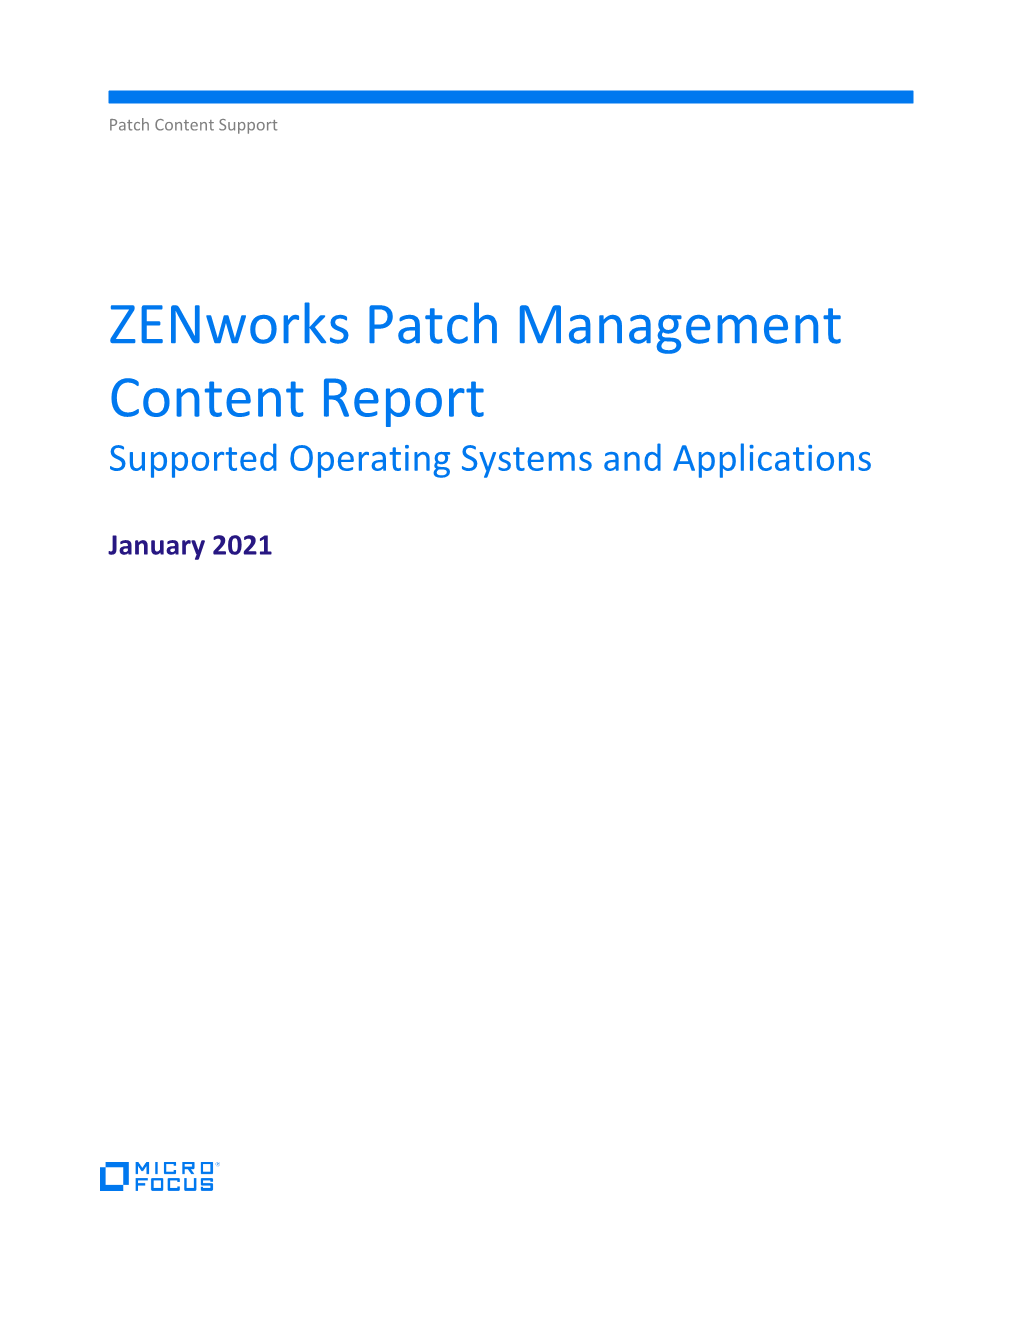 Zenworks Patch Management Content Report